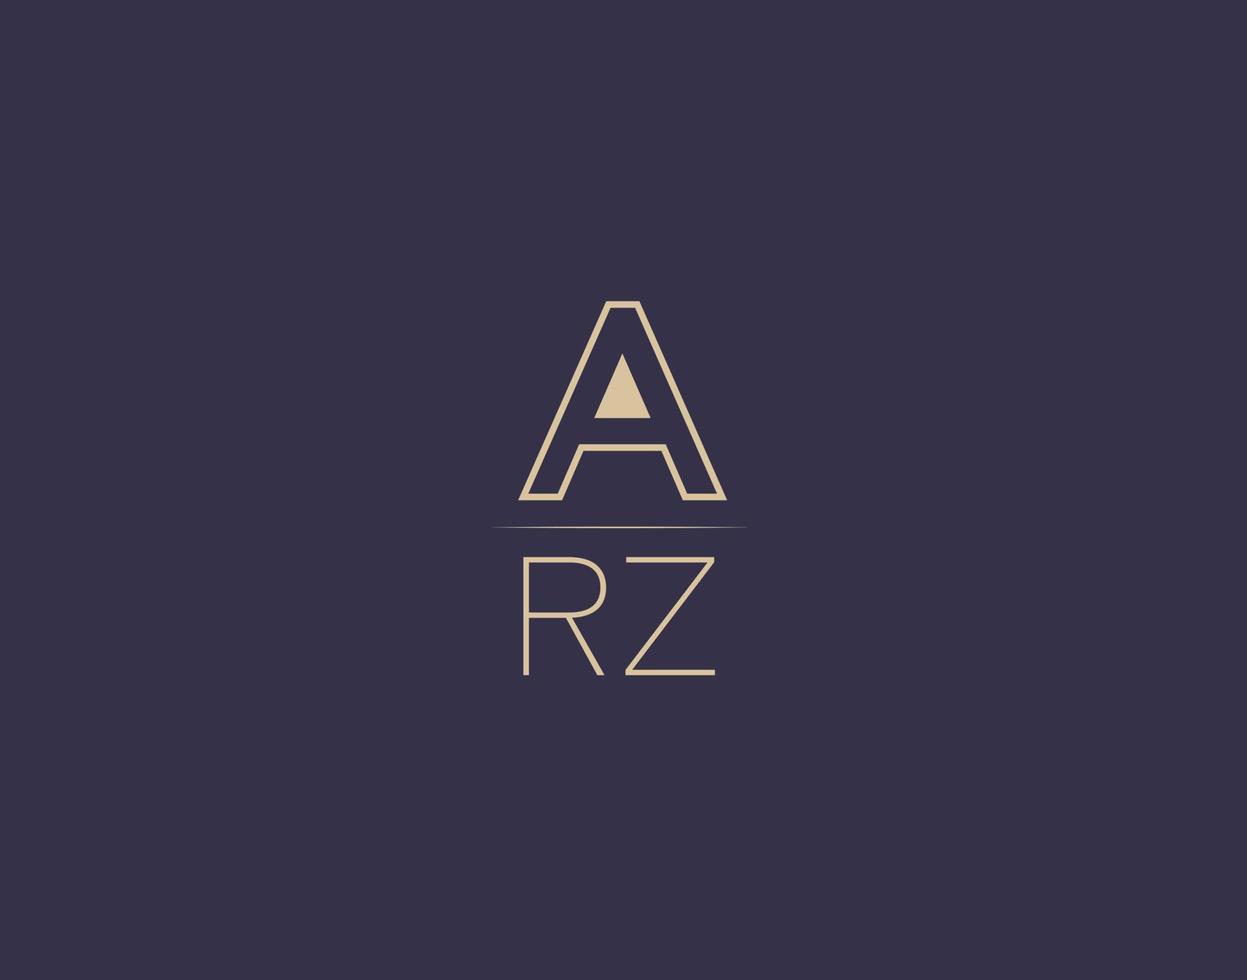 arz brief logo ontwerp modern minimalistische vector afbeeldingen